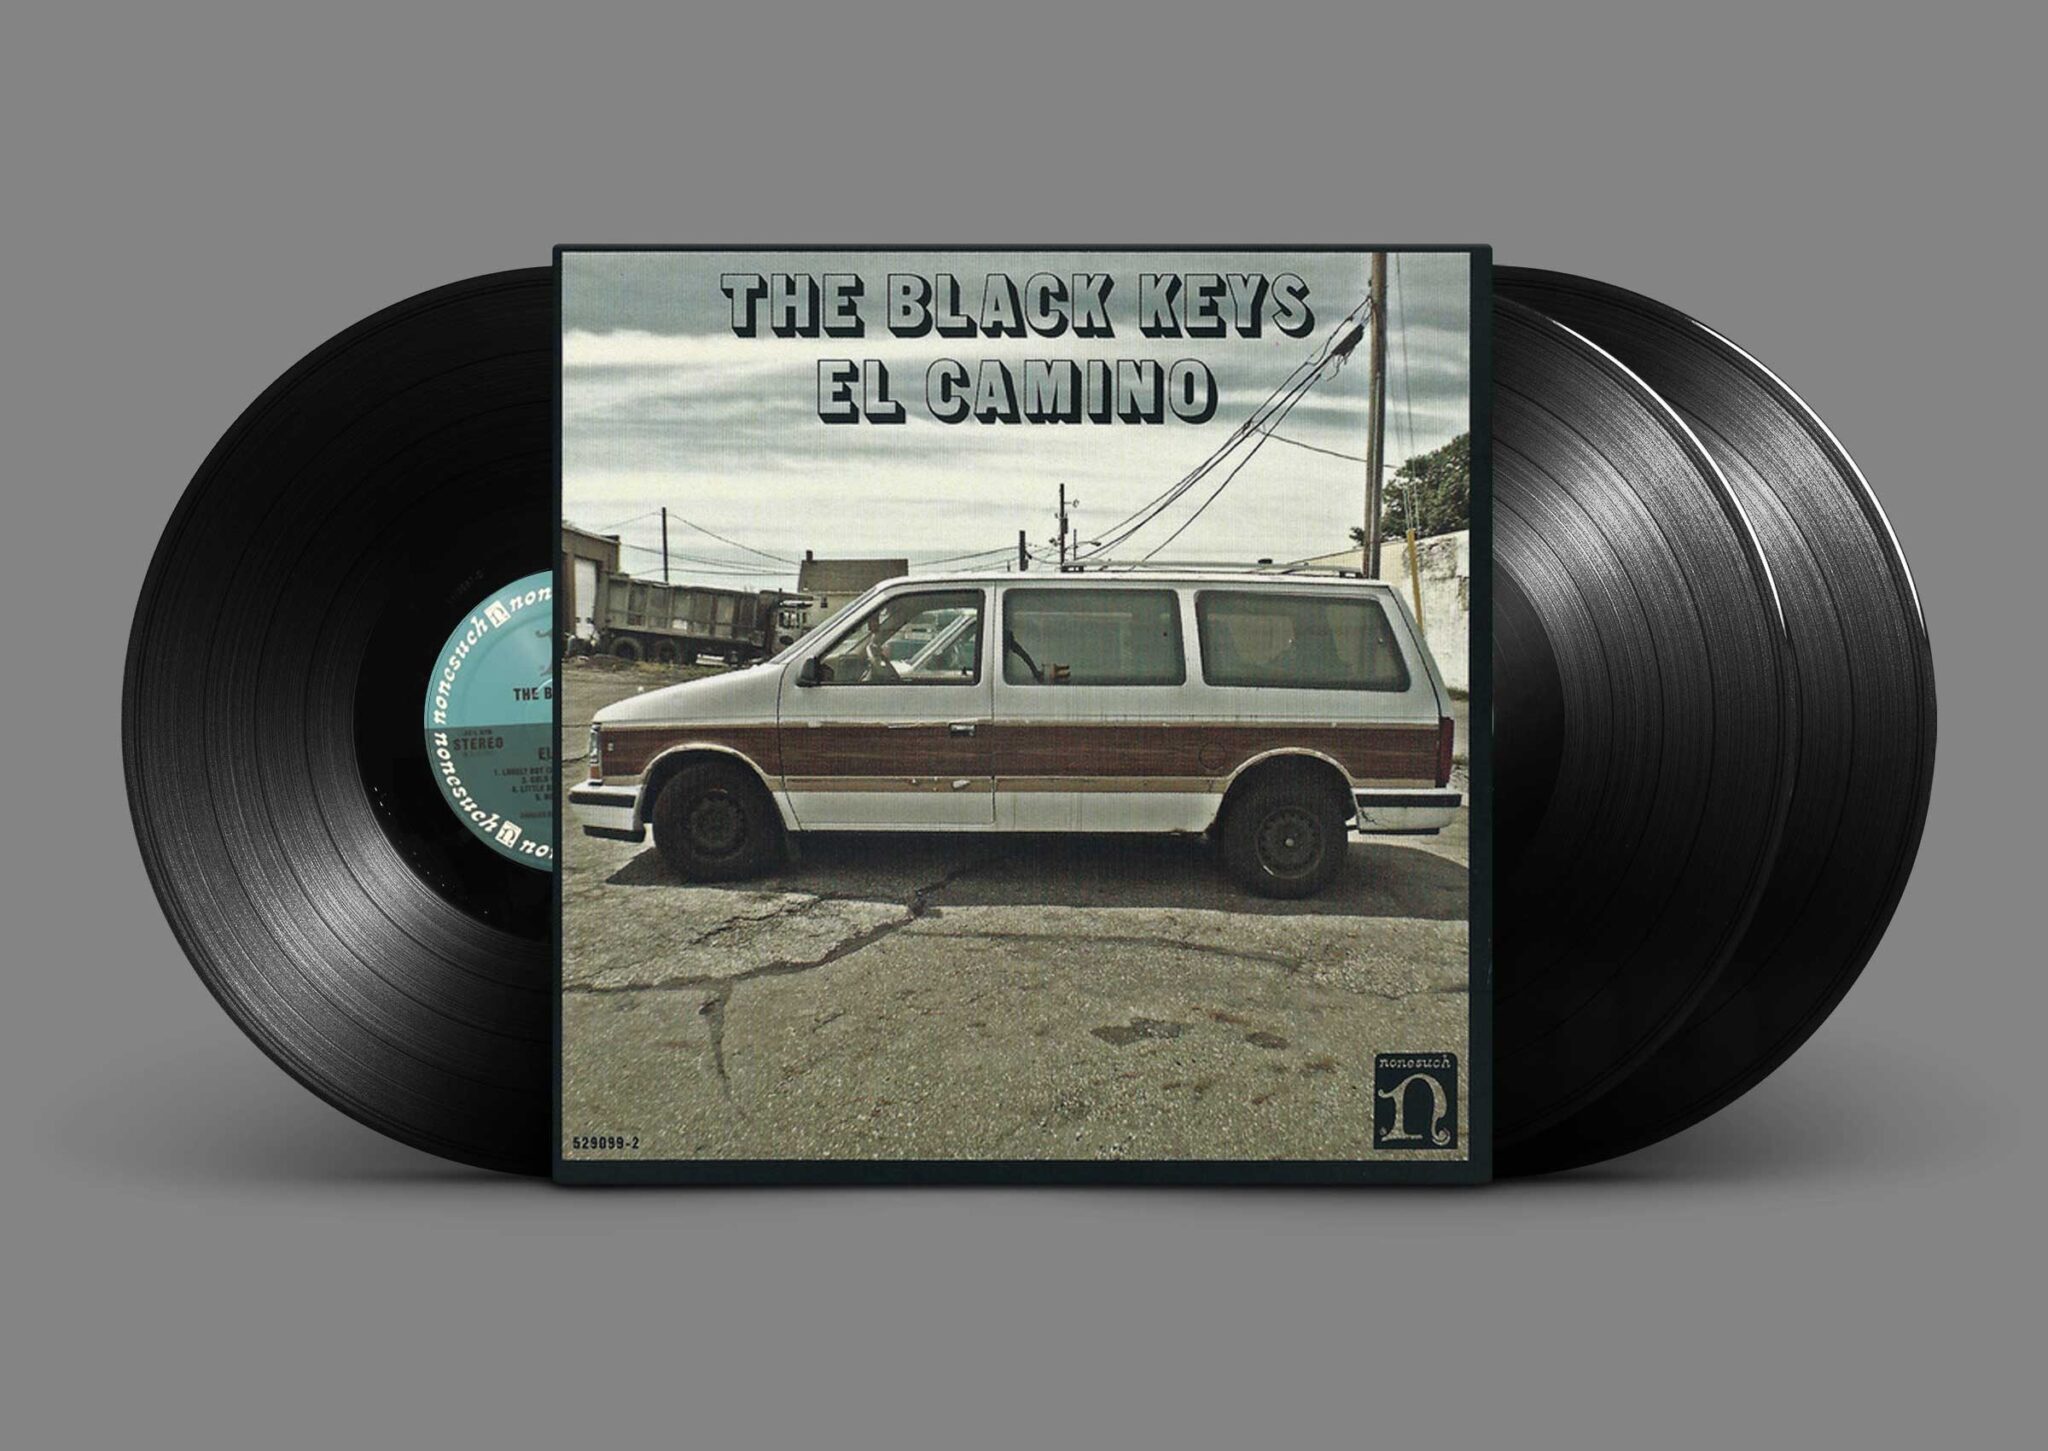 The Black Keys announce 10th anniversary reissue of 'El Camino